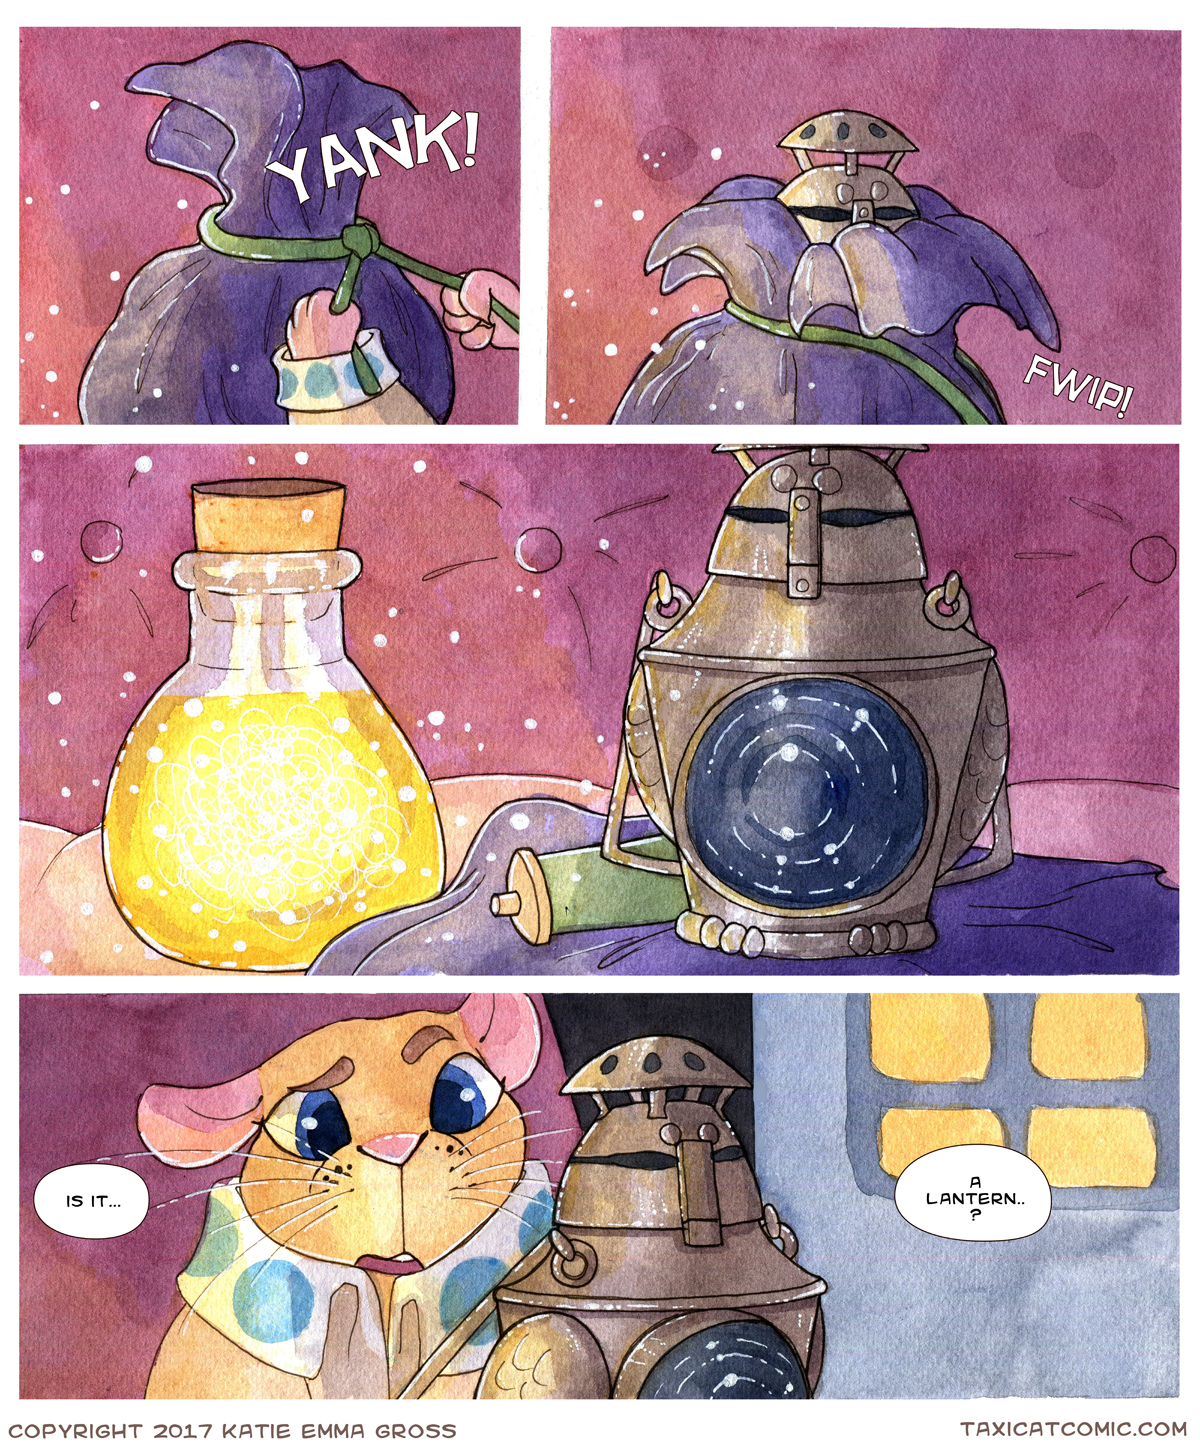 CH 1, Page 27- Lantern